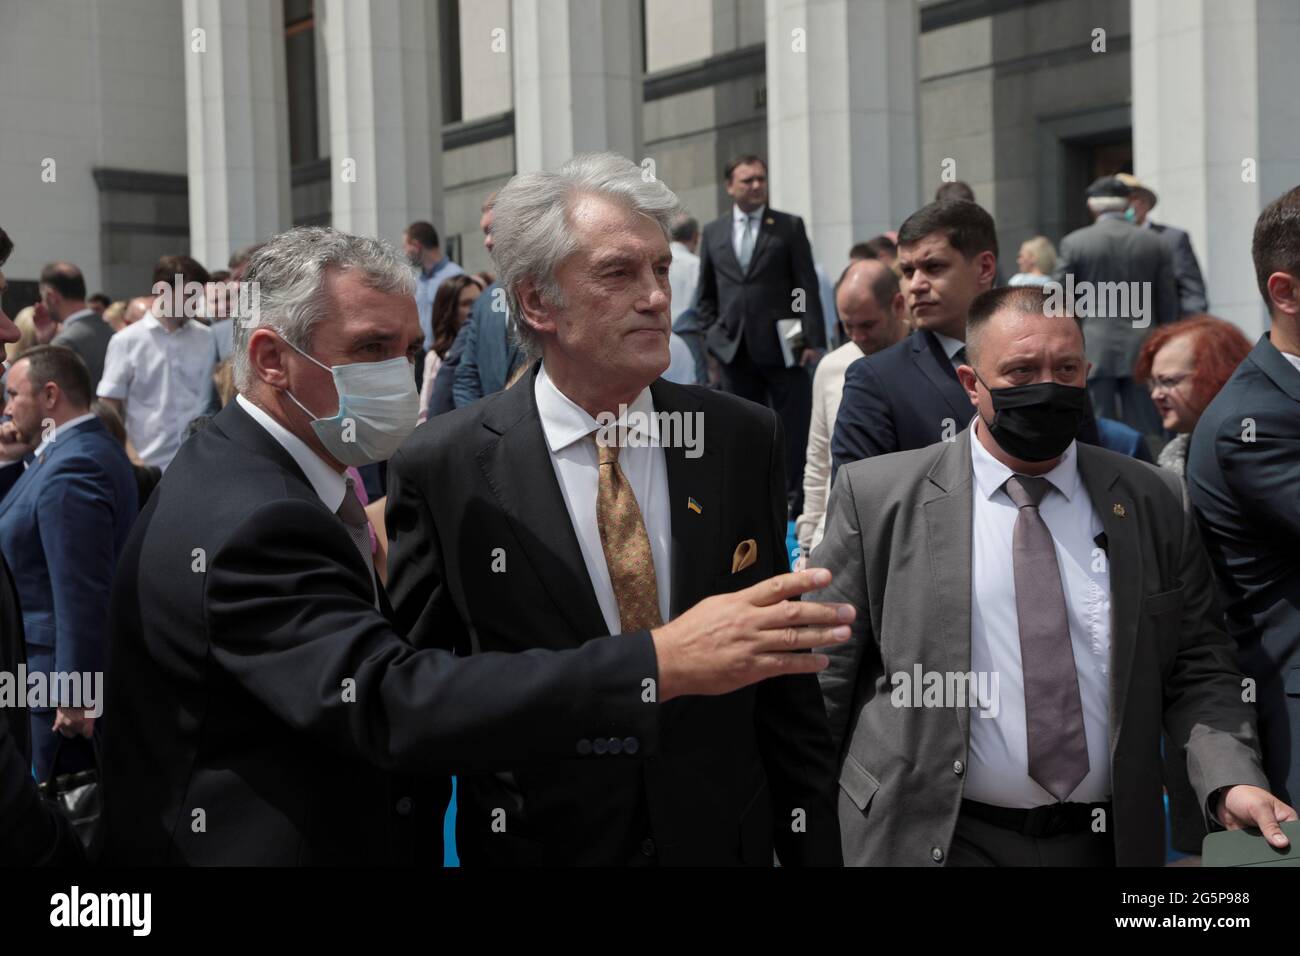 KYIV, UKRAINE - JUNE 28, 2021 - Former President of Ukraine Viktor Yushchenko (C) is pictured outside the Ukrainian parliament building following the Stock Photo